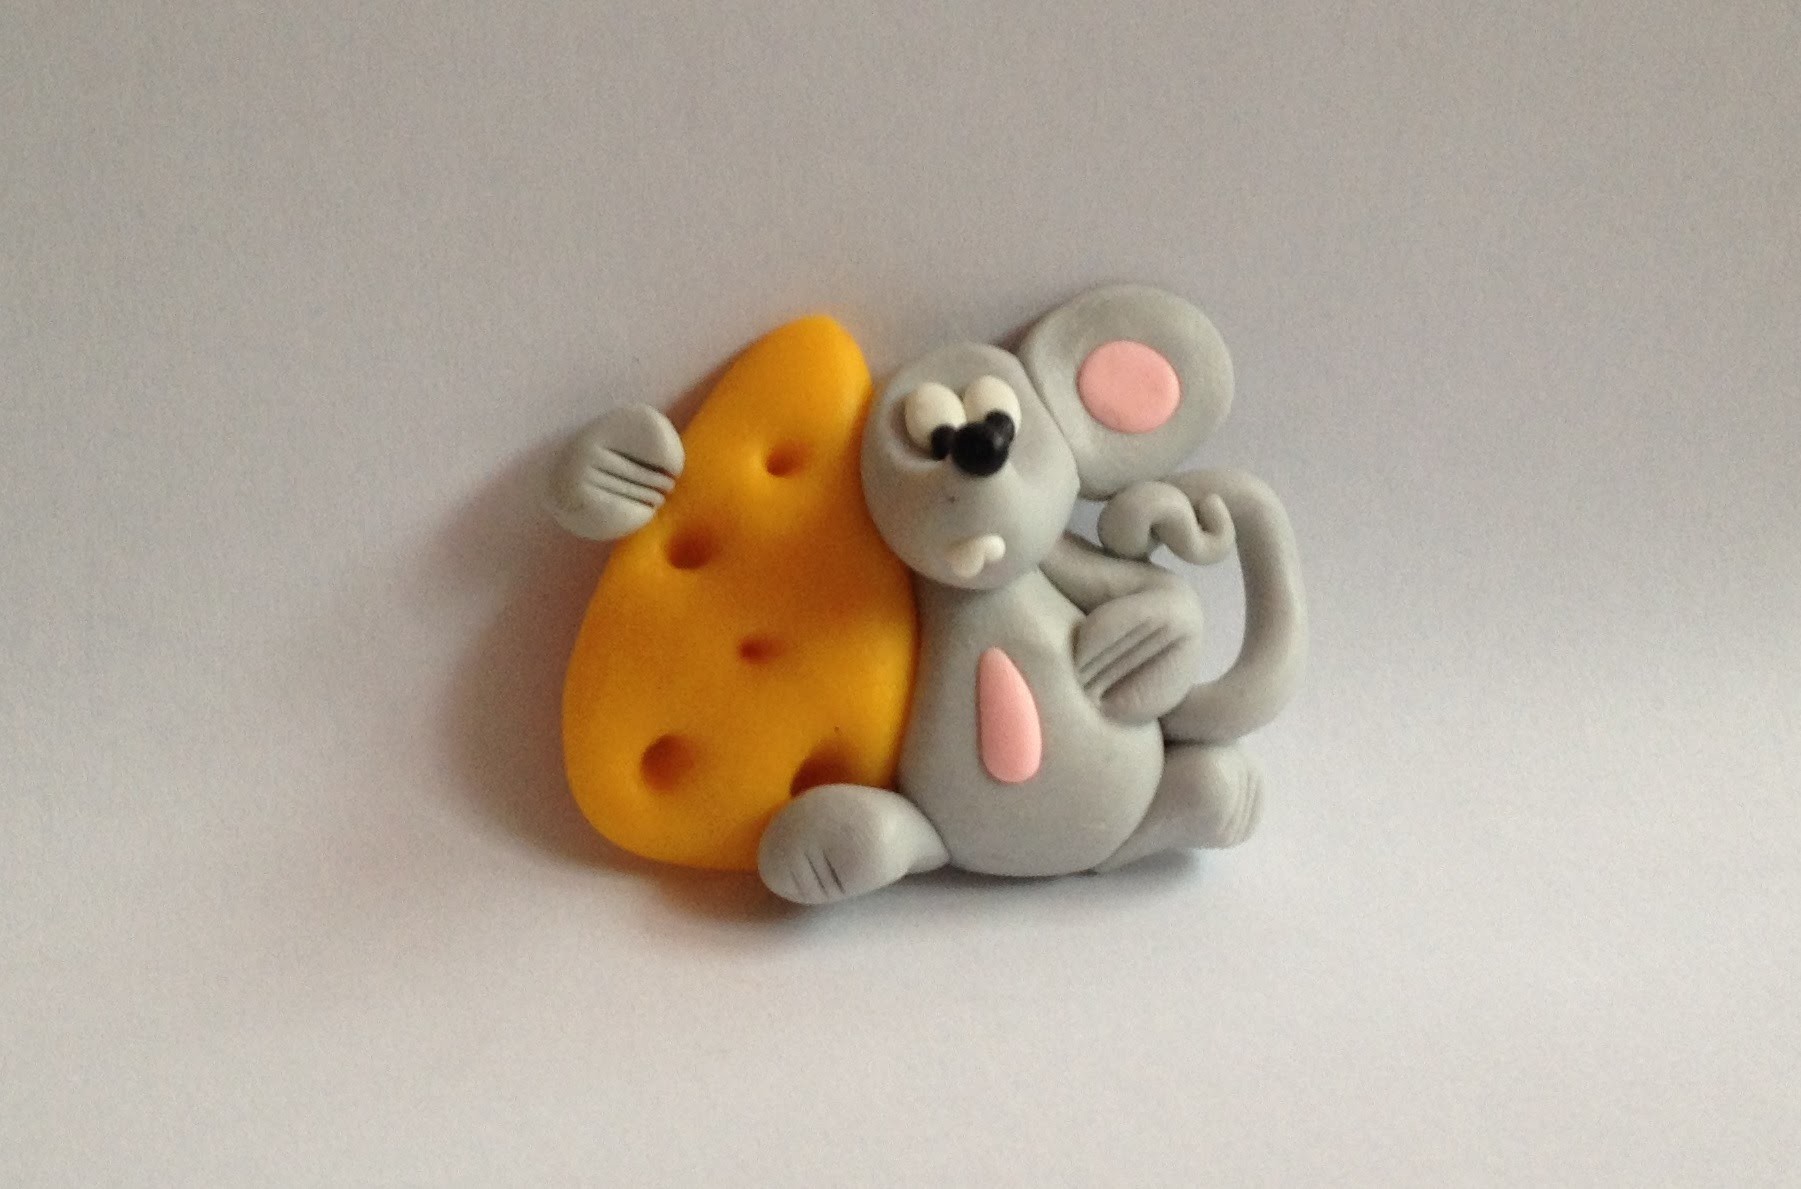 Mouse with cheese handmade polymer clay (magnet on fridge) - Magnes na lodowke z modeliny myszka